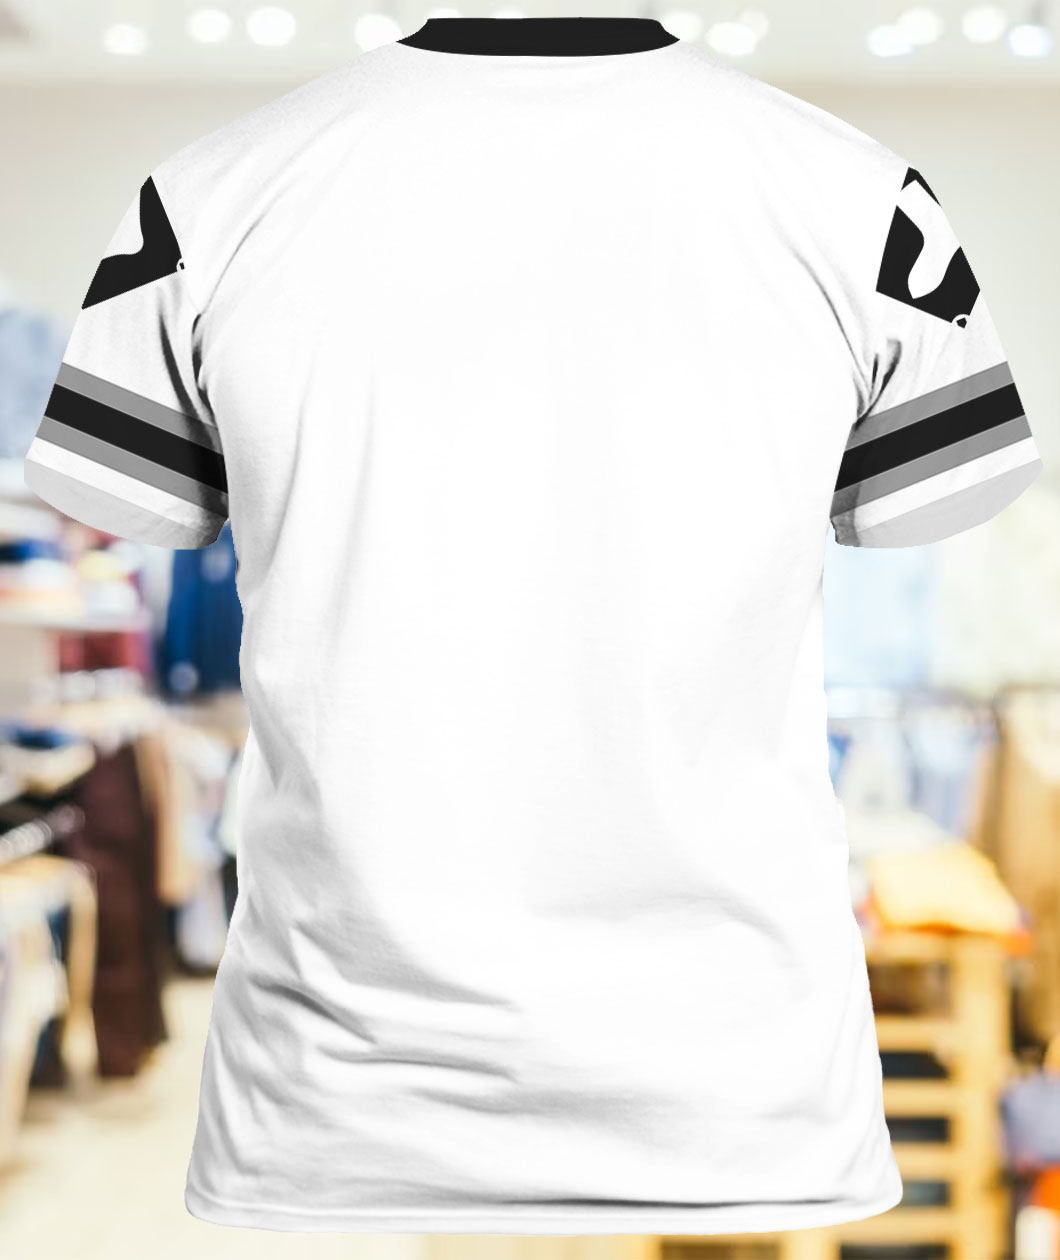 2023 White Sox Number 99 Football Jersey Shirt Giveaway - Lelemoon